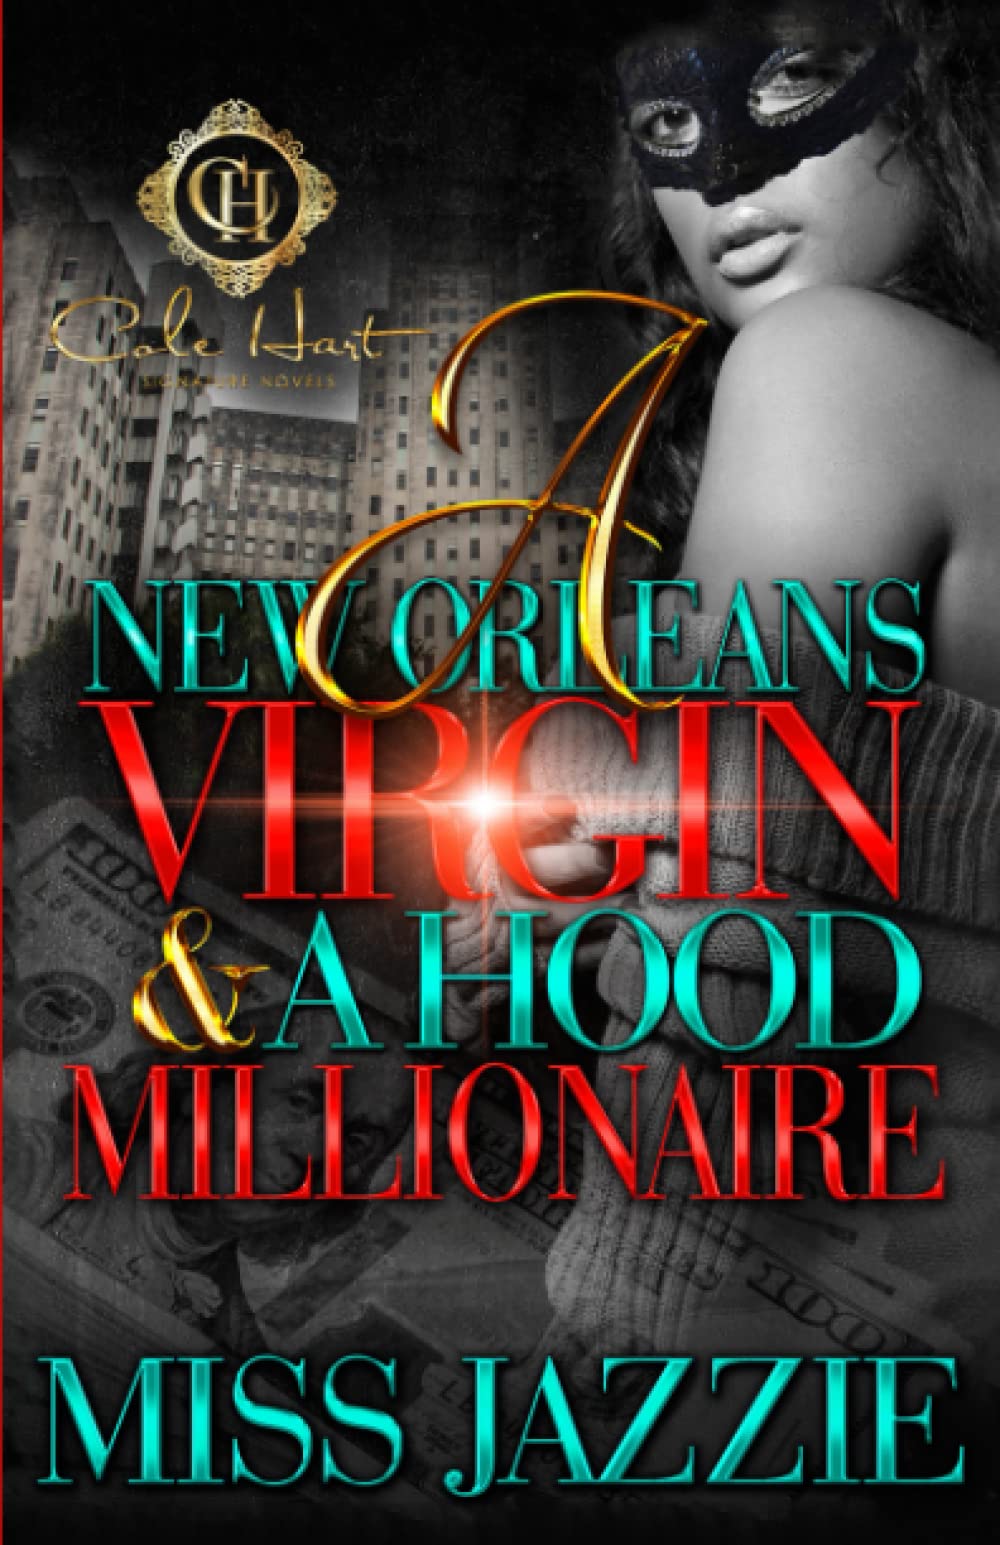 A New Orleans Virgin & Hood Millionaire SureShot Books